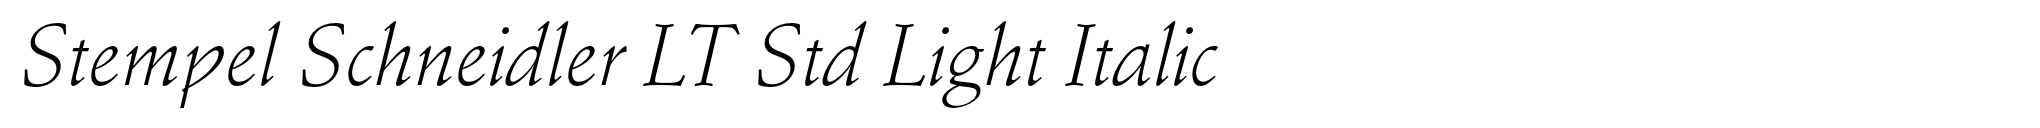 Stempel Schneidler LT Std Light Italic image